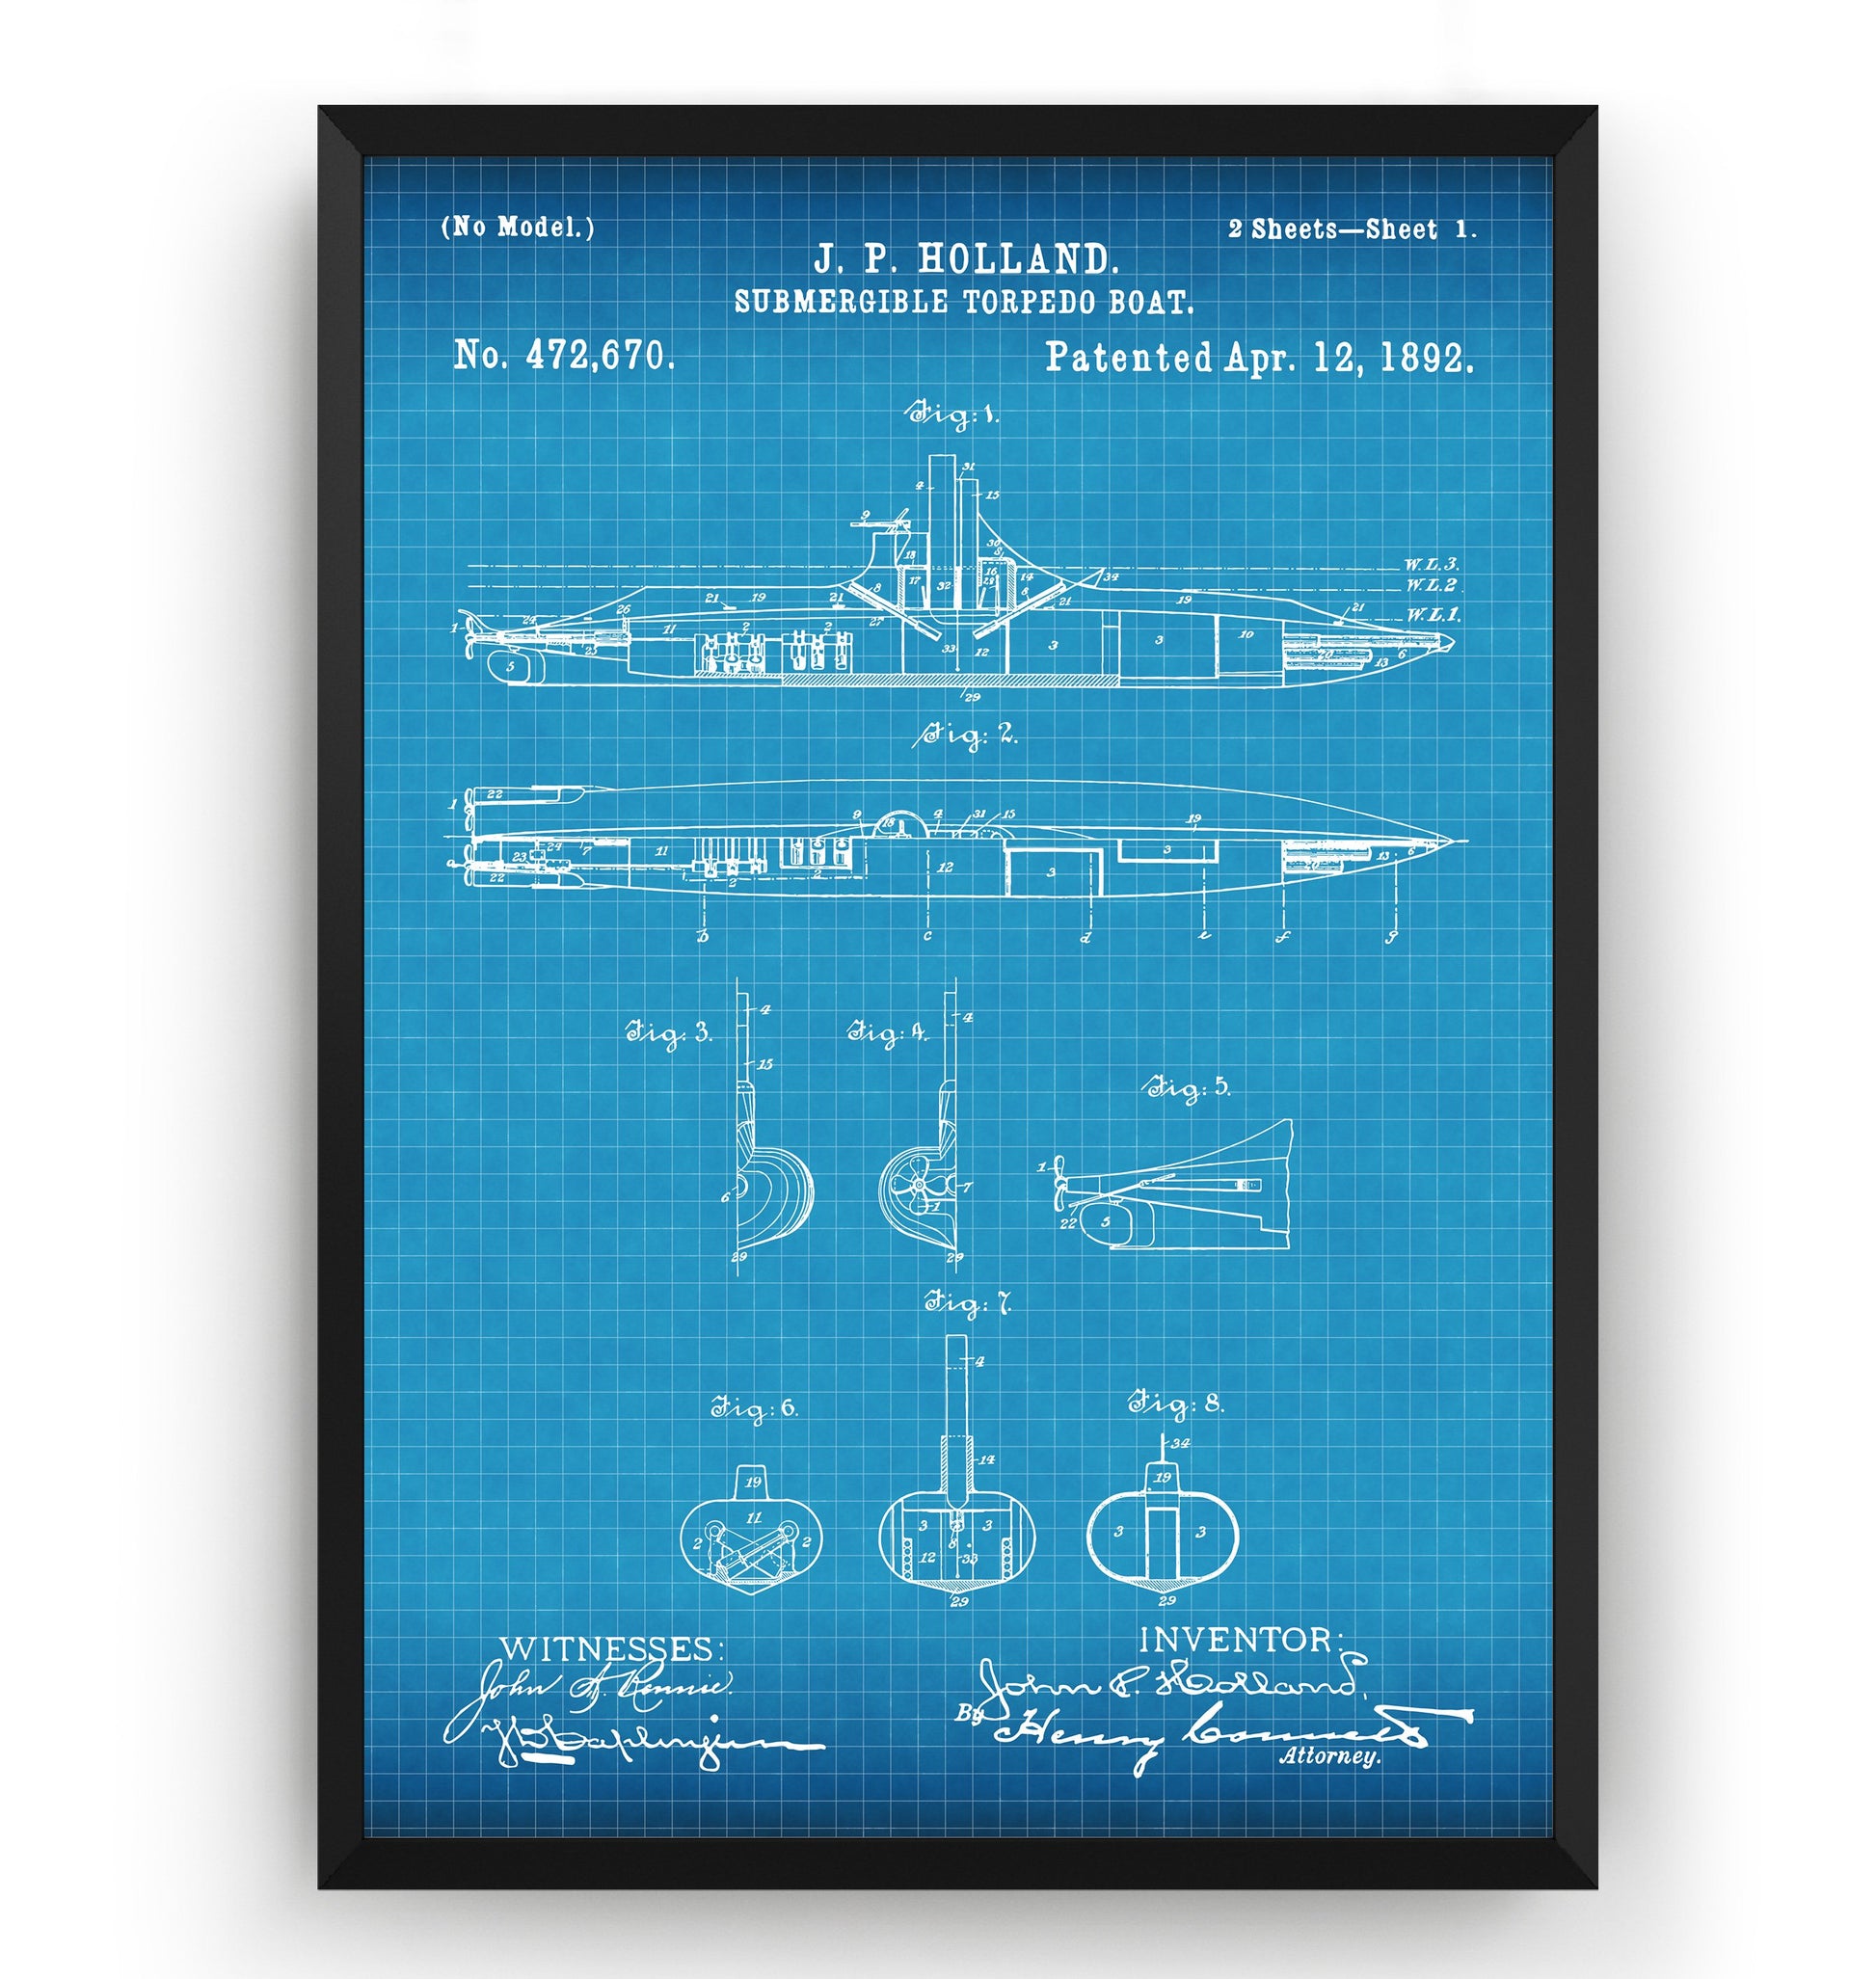 Submarine Torpedo Boat 1892 Patent Print - Magic Posters